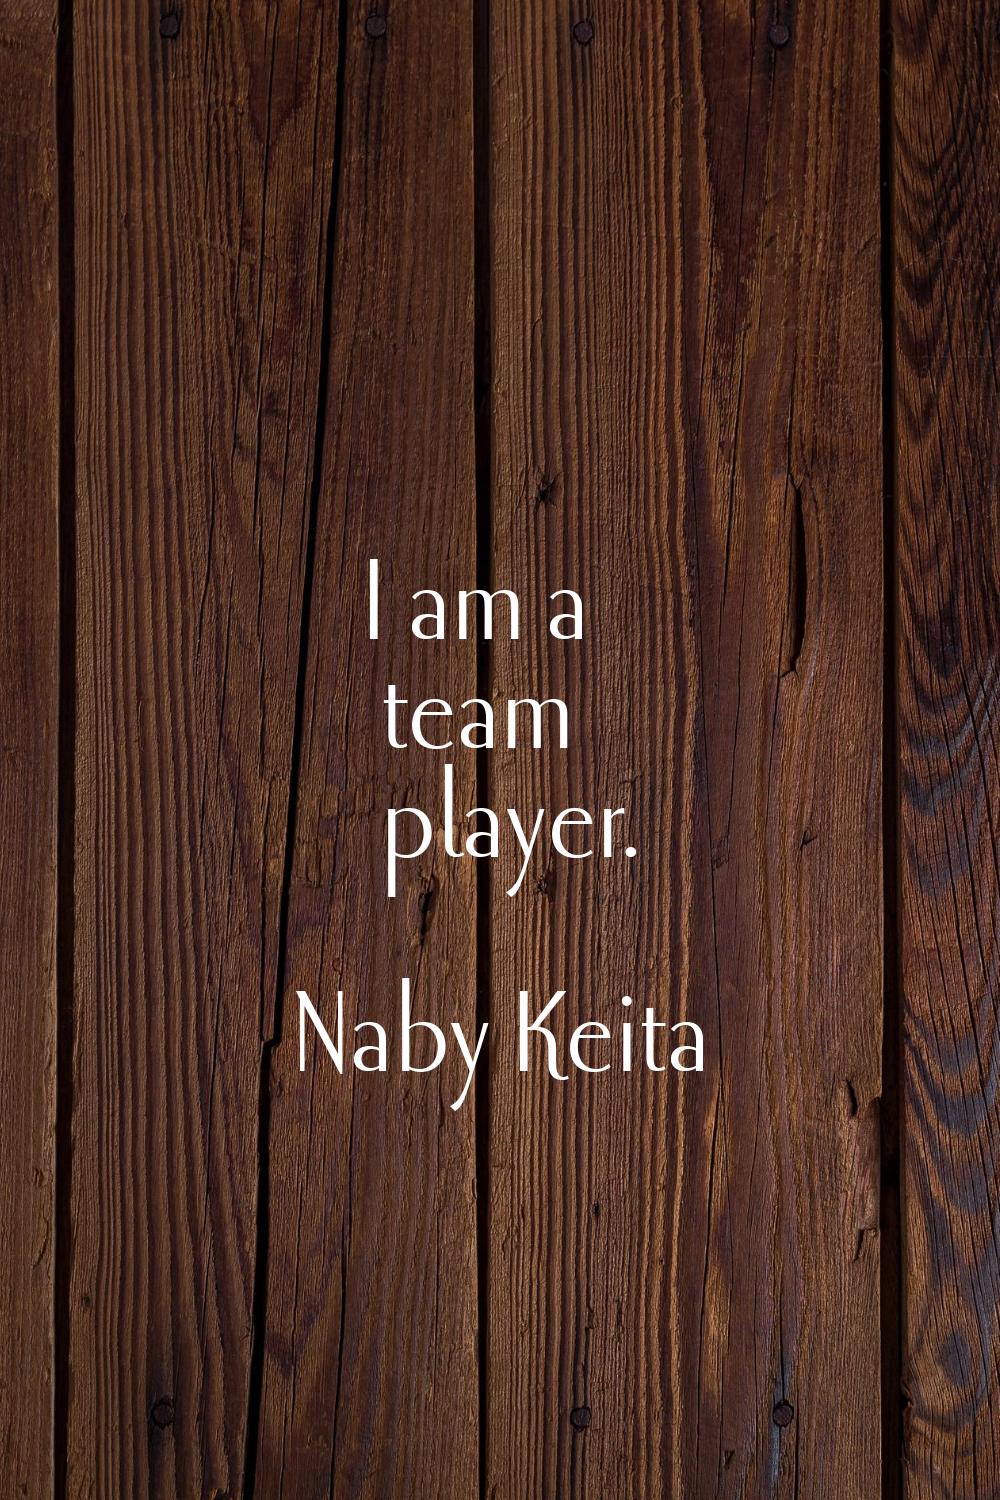 I am a team player.